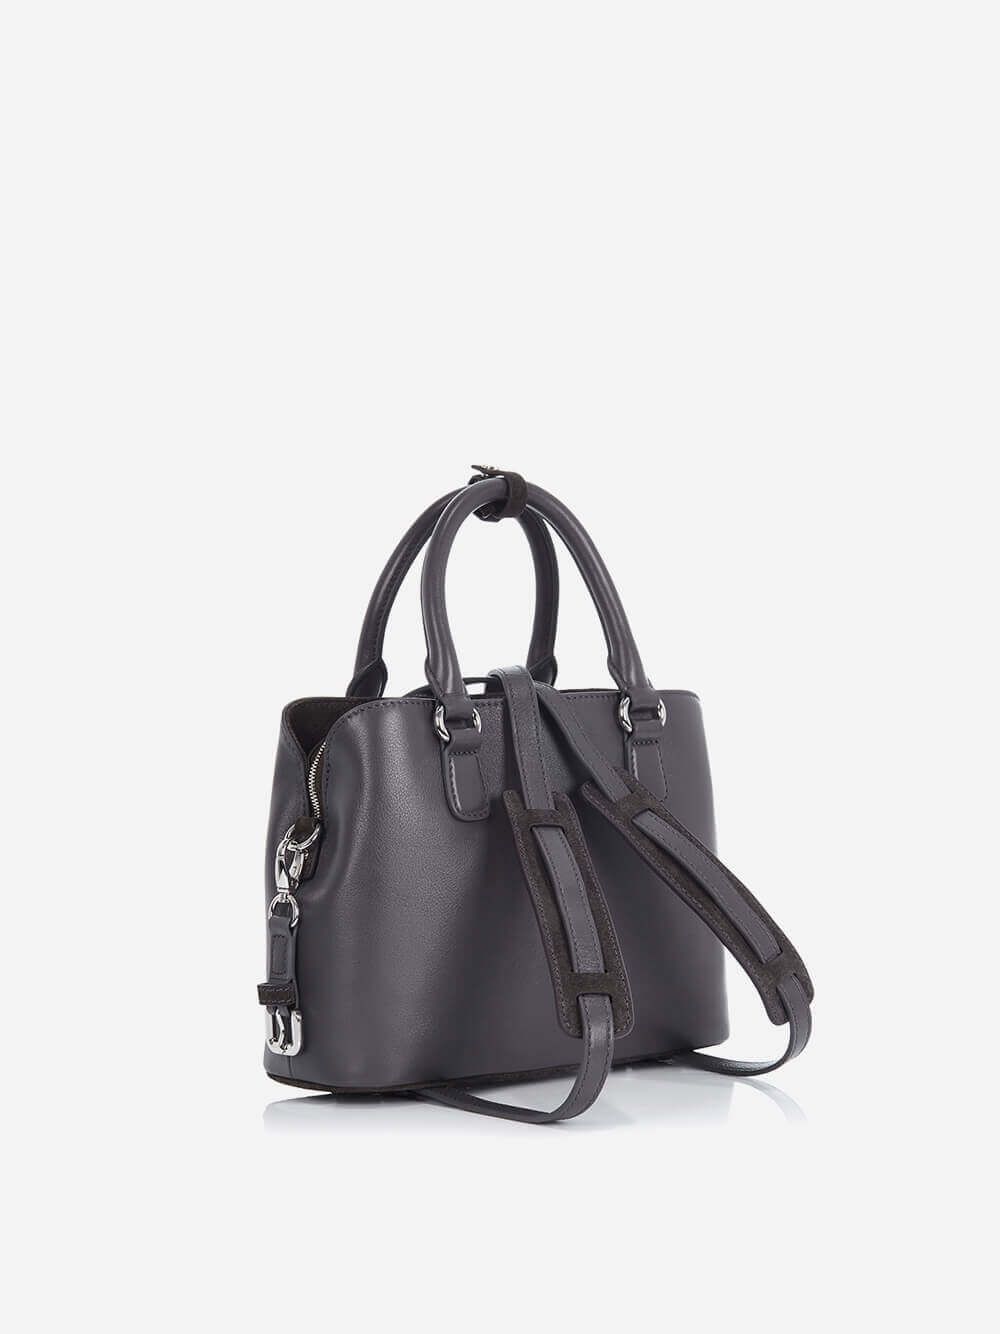 XM Charcoal Bag | Any Di